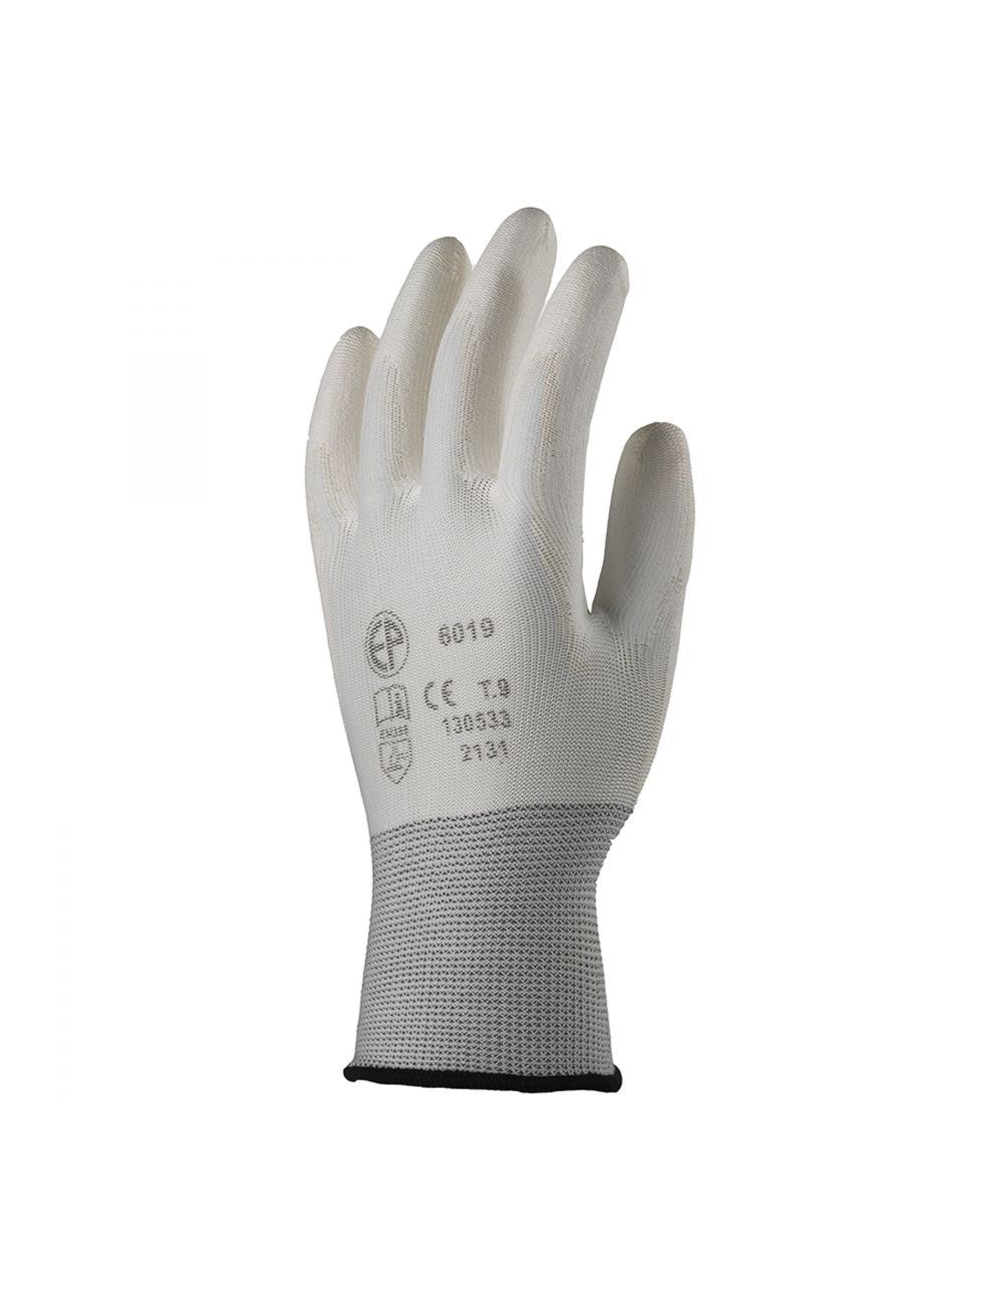 Gants de protection polyester blanc, paume end.PU blanc T07 (Ex 6107)